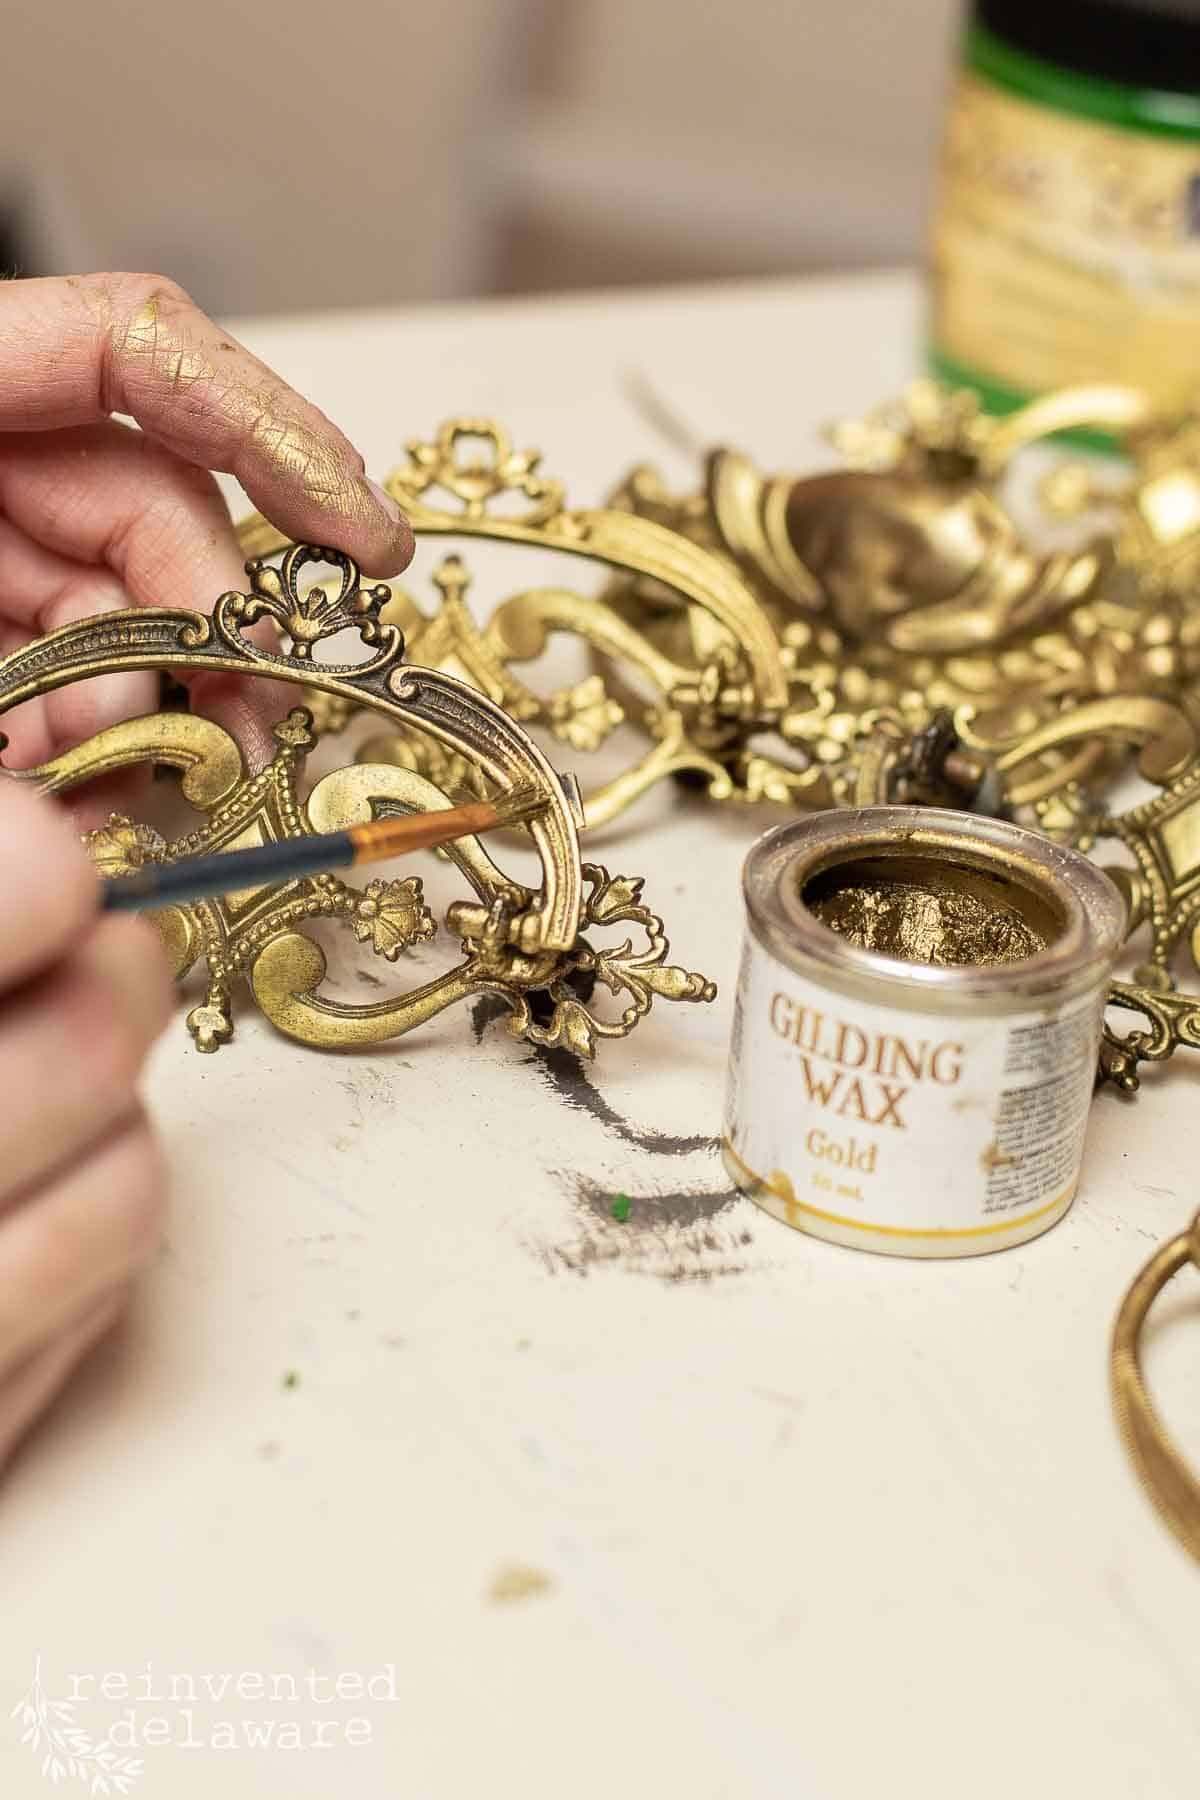 applying gilding wax to antique brass hardware